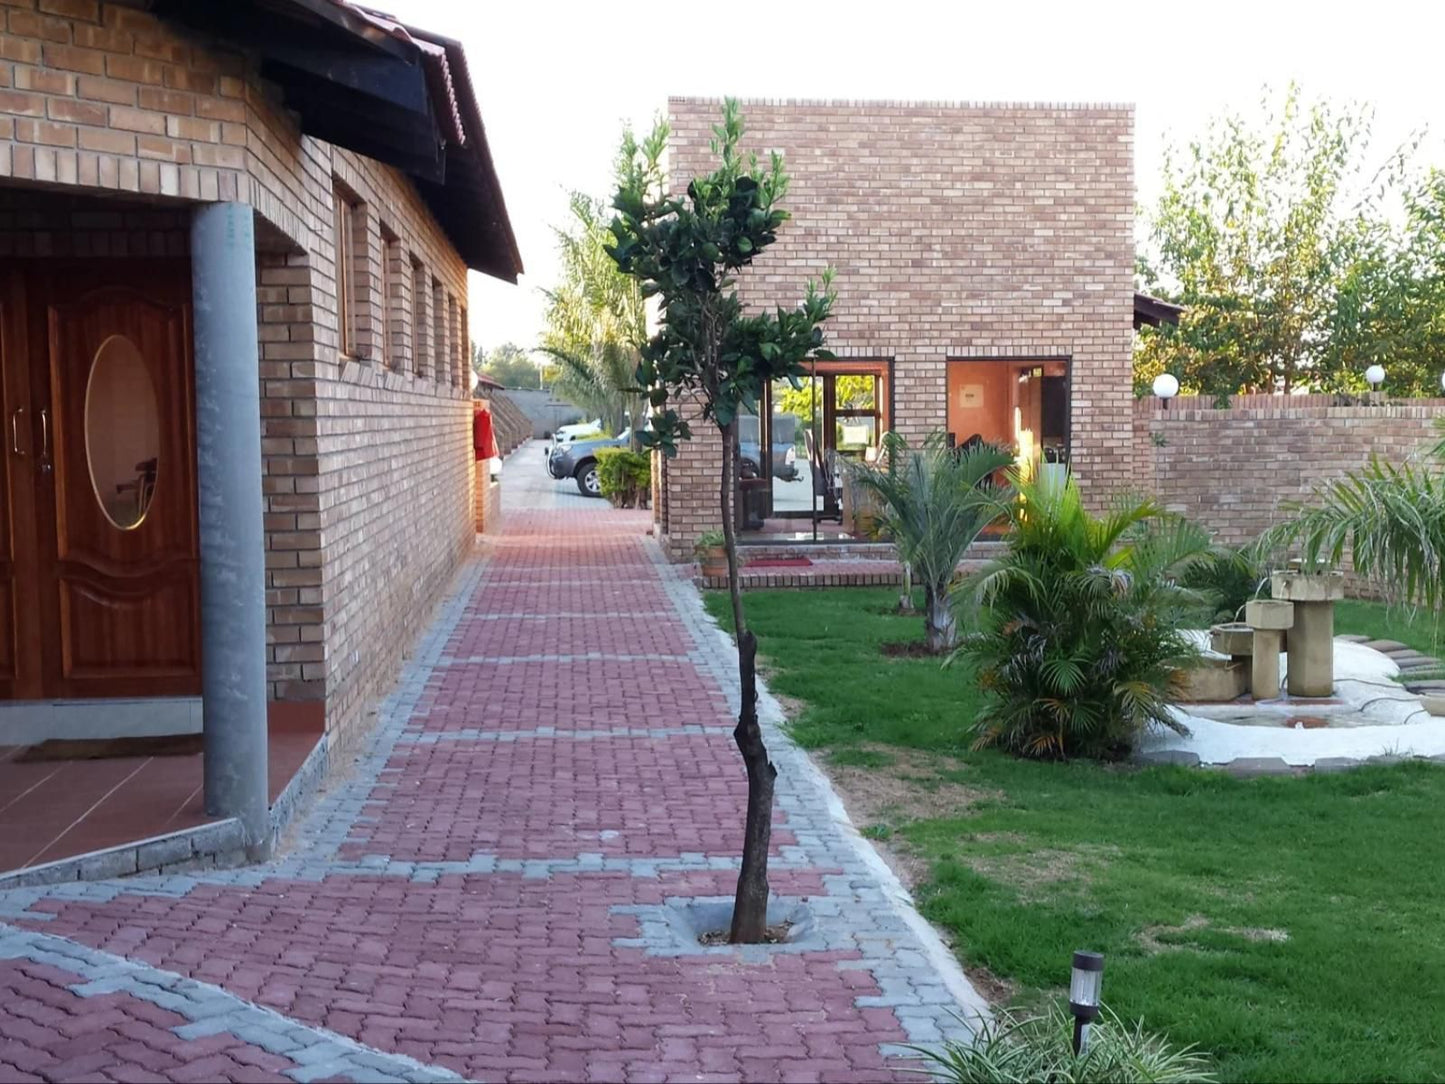 Silver Exclusive Lodge Dalmada Polokwane Pietersburg Limpopo Province South Africa House, Building, Architecture, Brick Texture, Texture